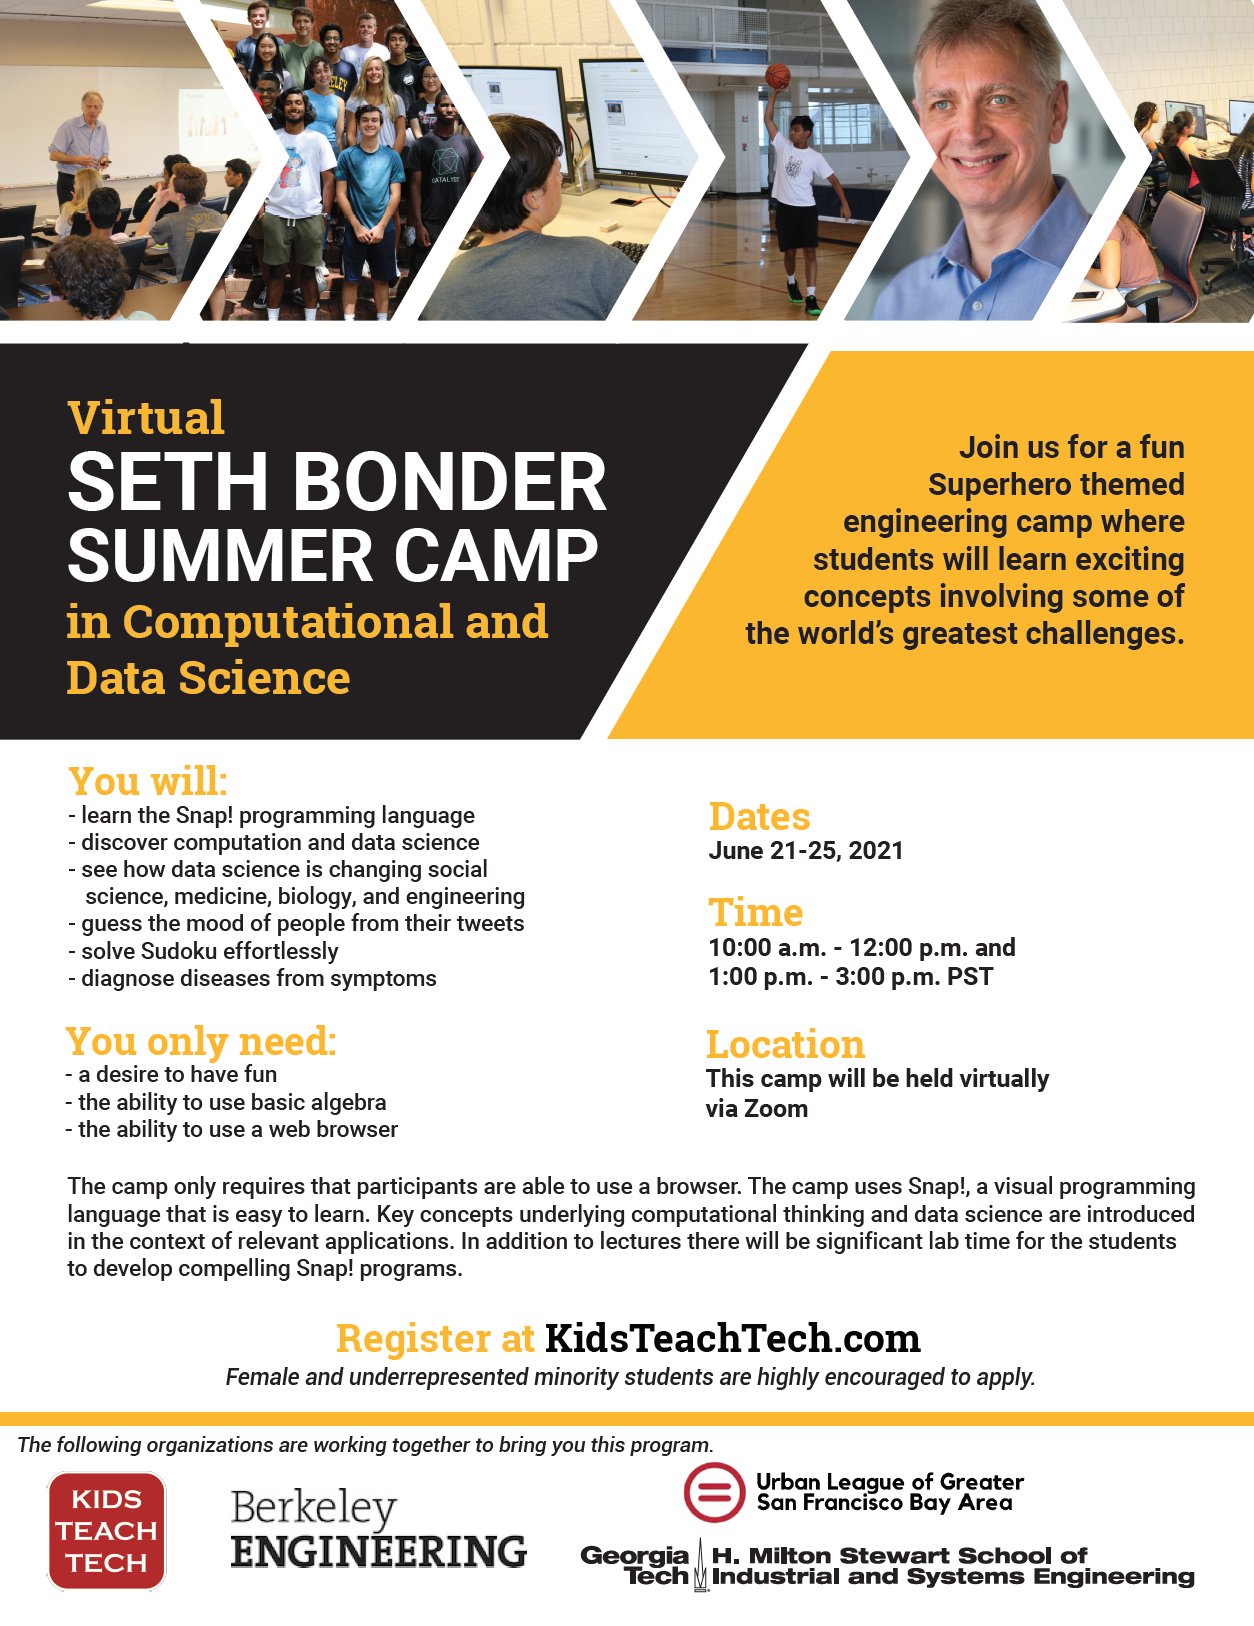 Seth Bonder Summer Camp in Computational Data Science